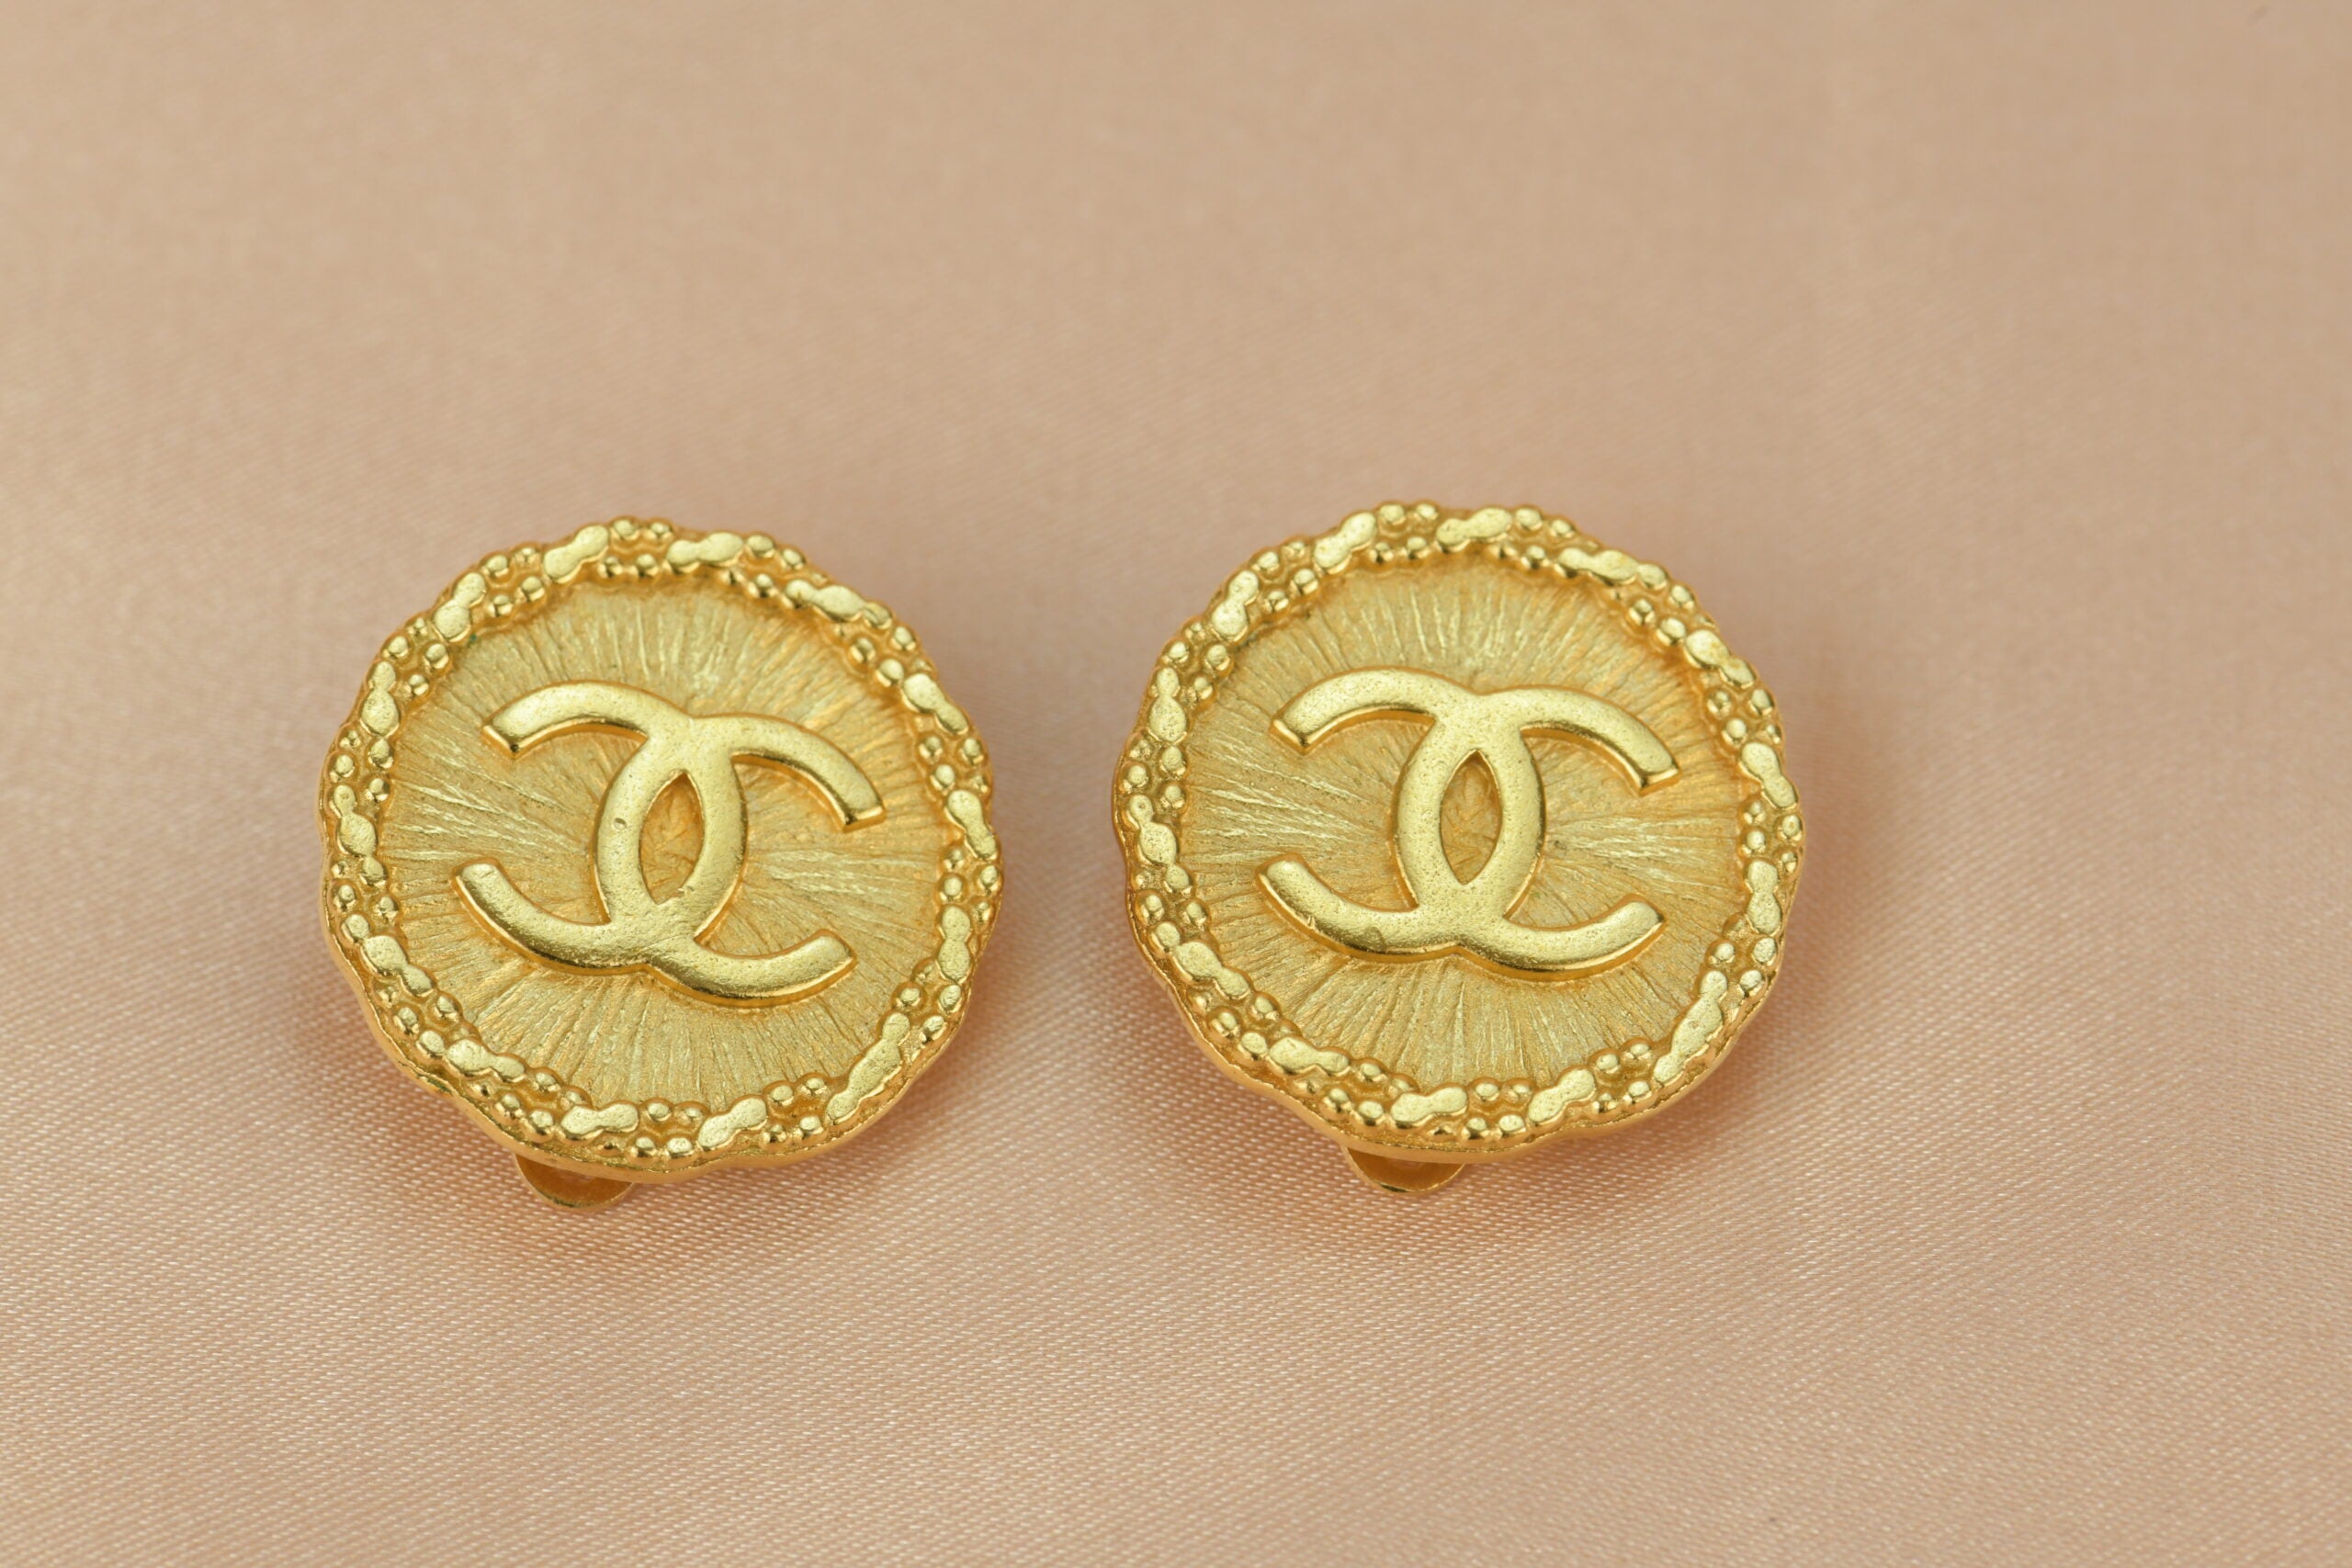 Vintage Chanel Earrings  Annabel James